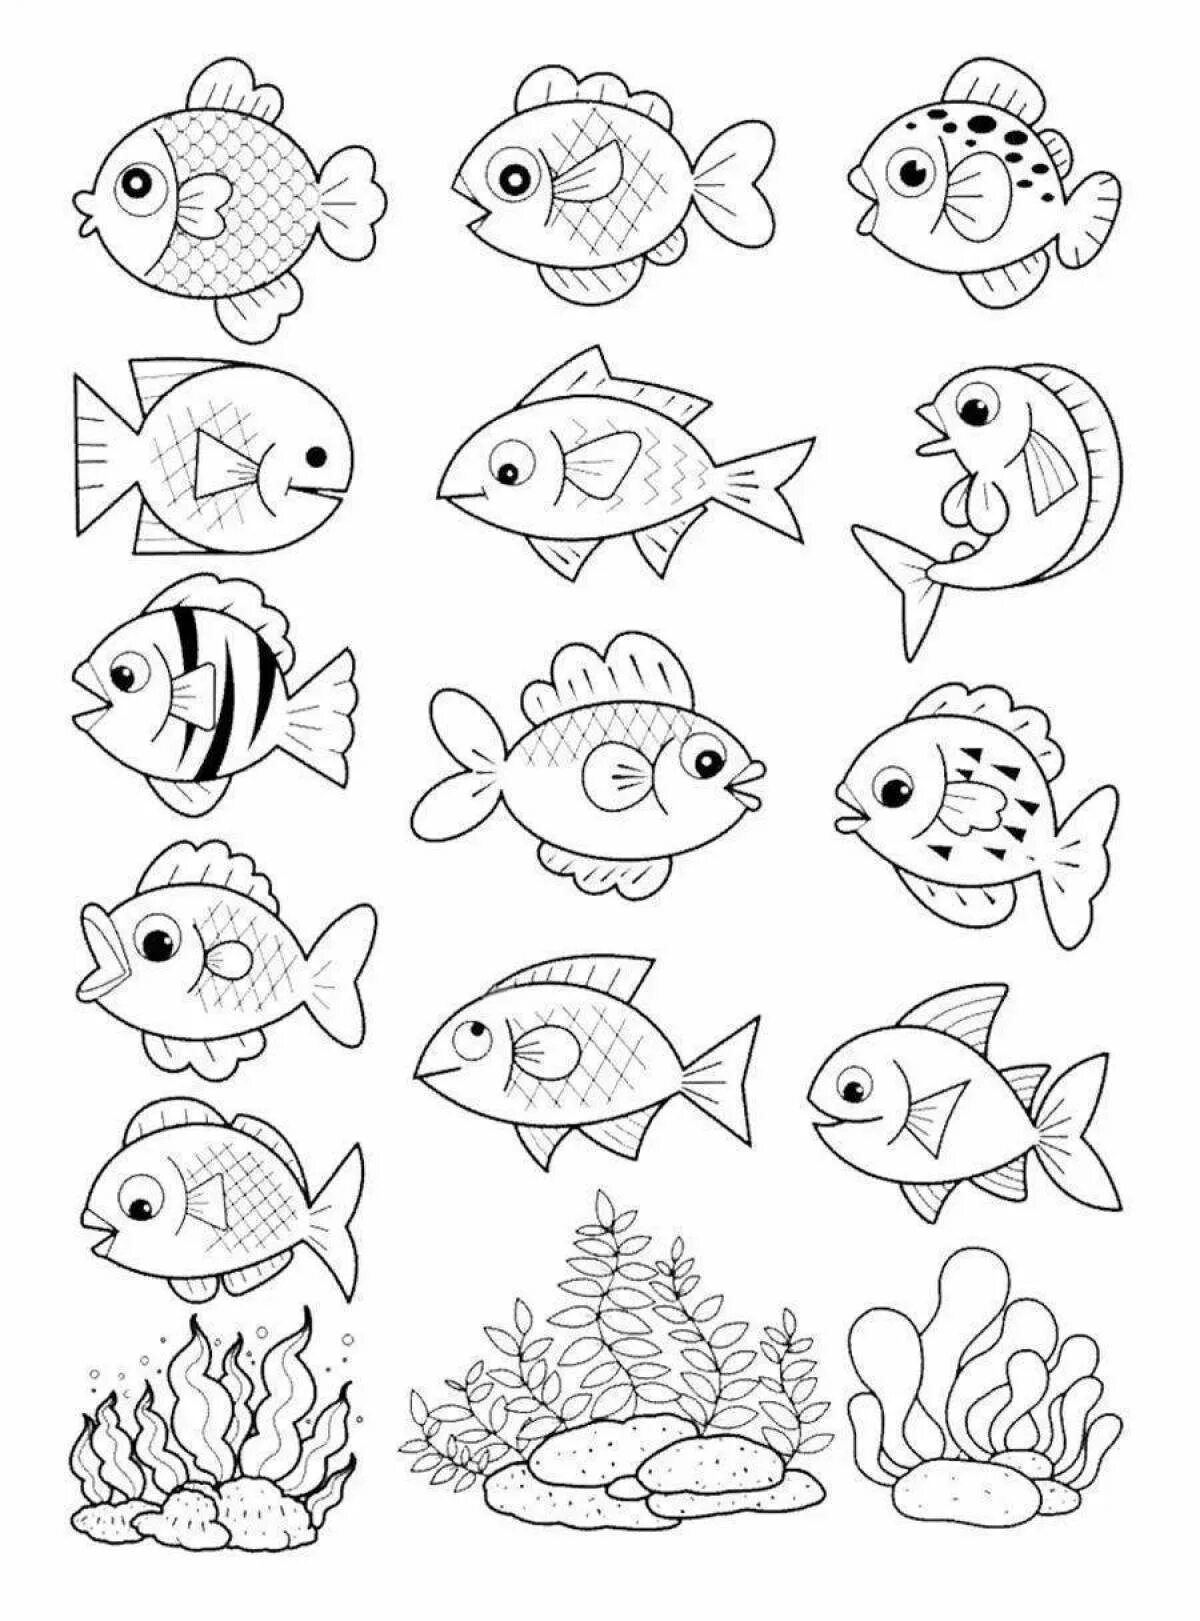 Раскраска рыбы для детей 7 лет. Раскраска рыбка. Рыба раскраска для детей. Рыбка раскраска для детей. Аквариумные рыбки раскраска.